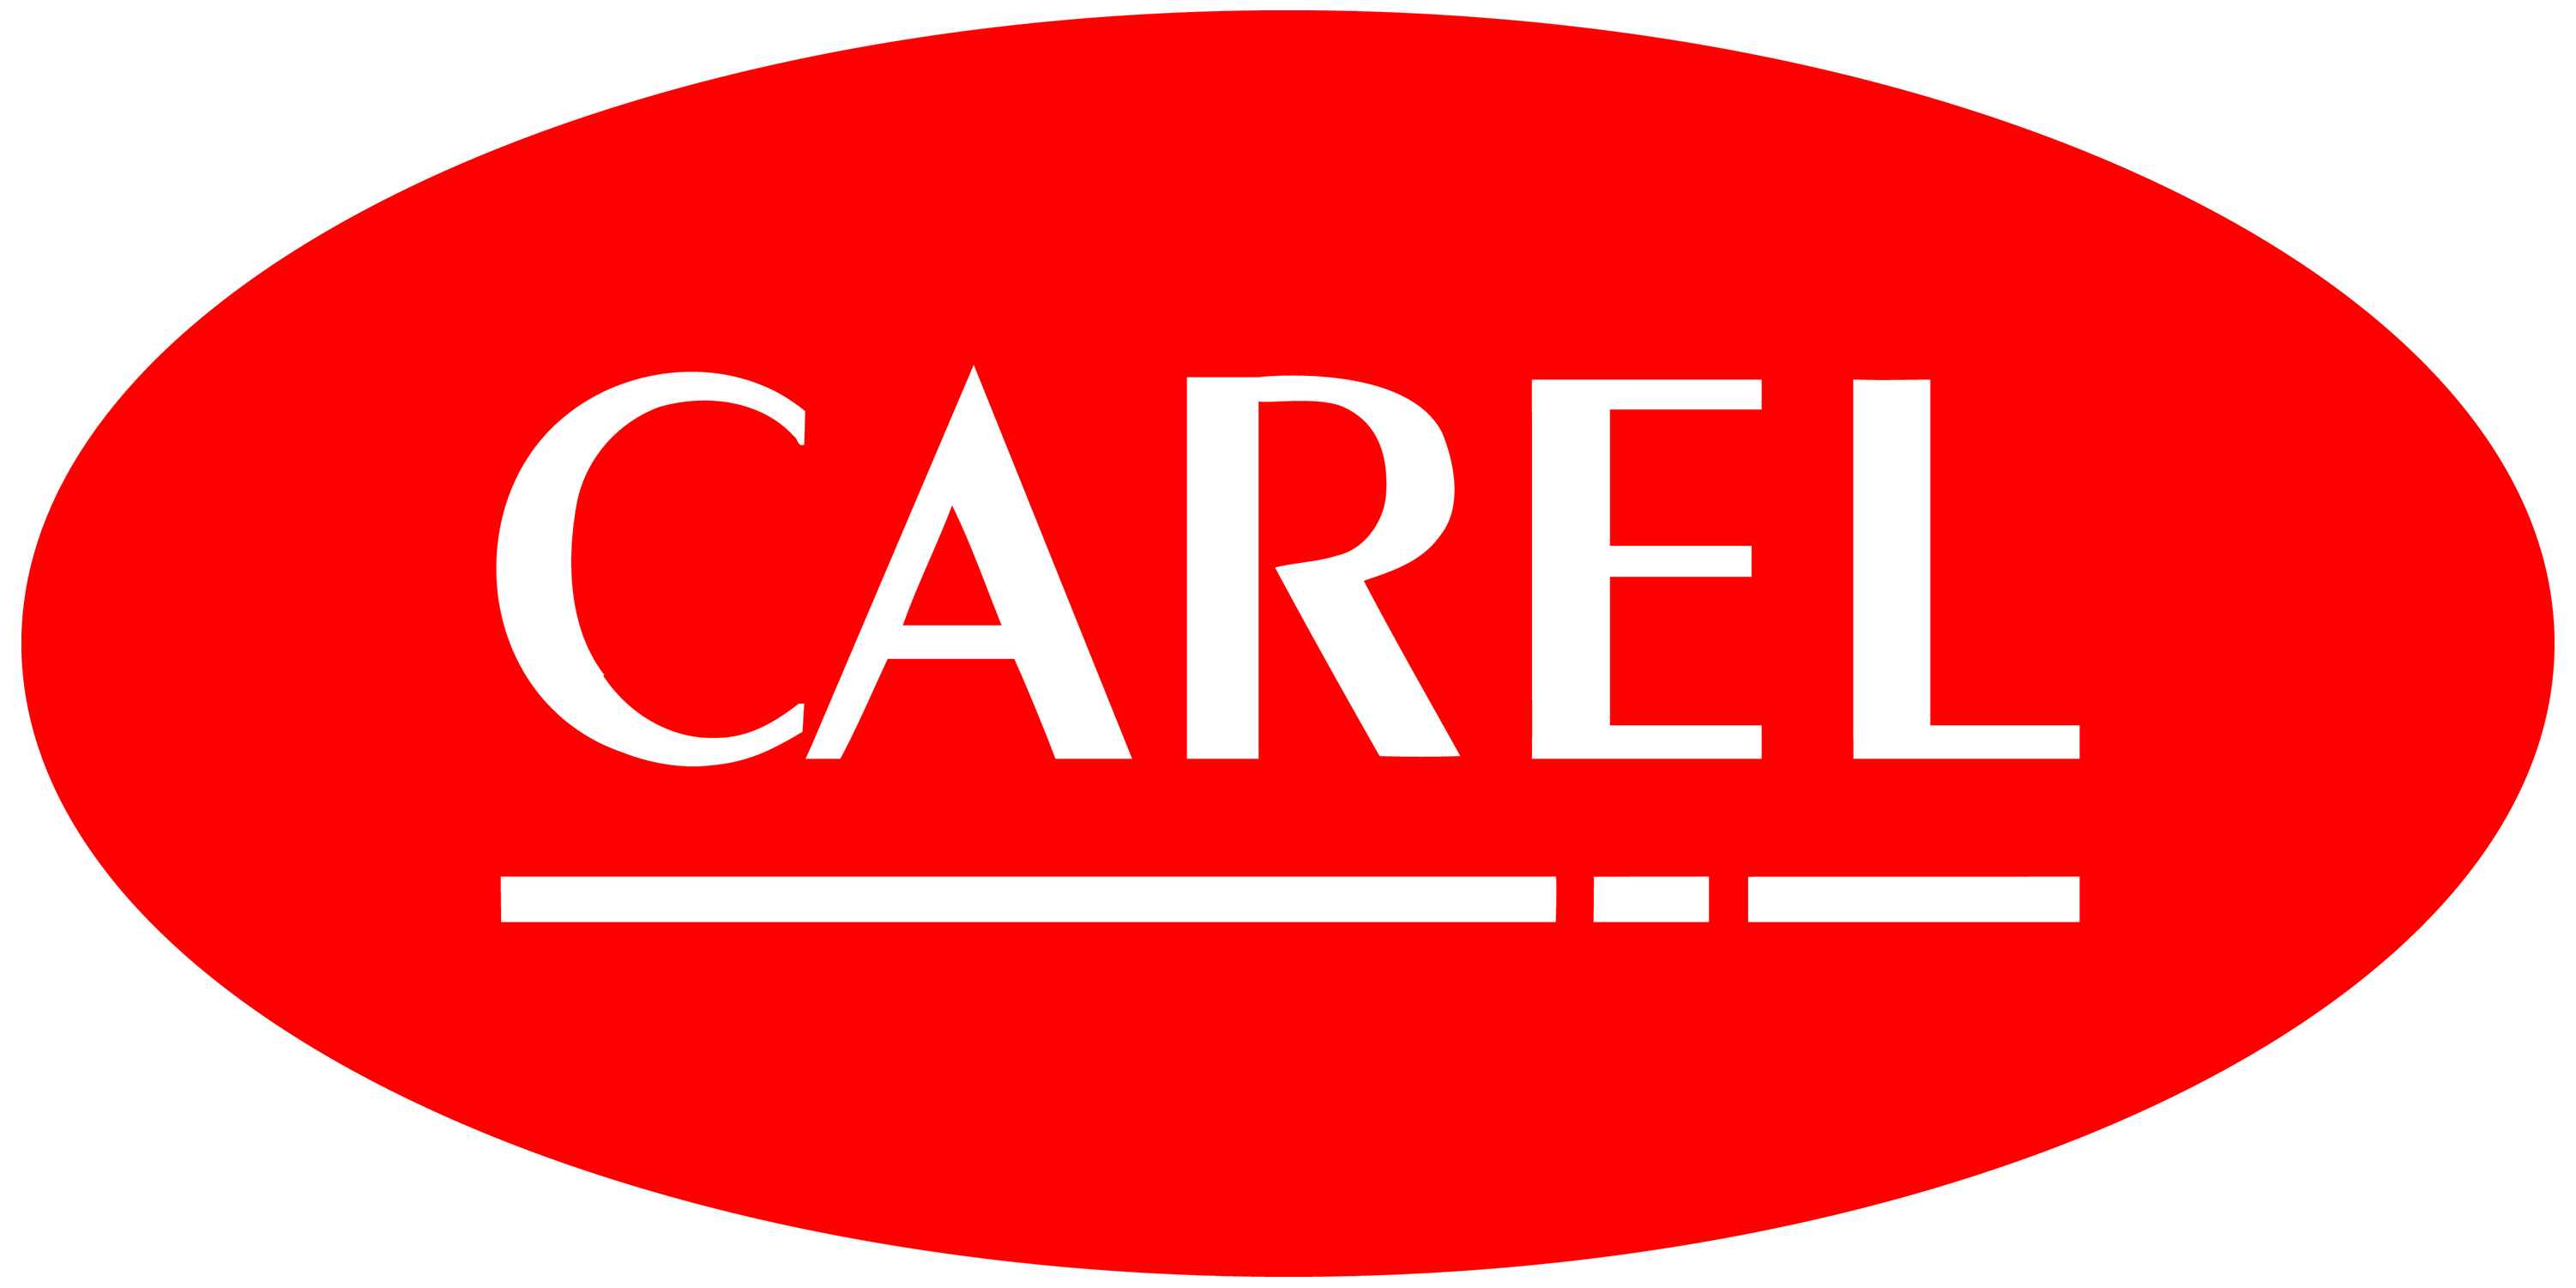 CAREL - Certifications